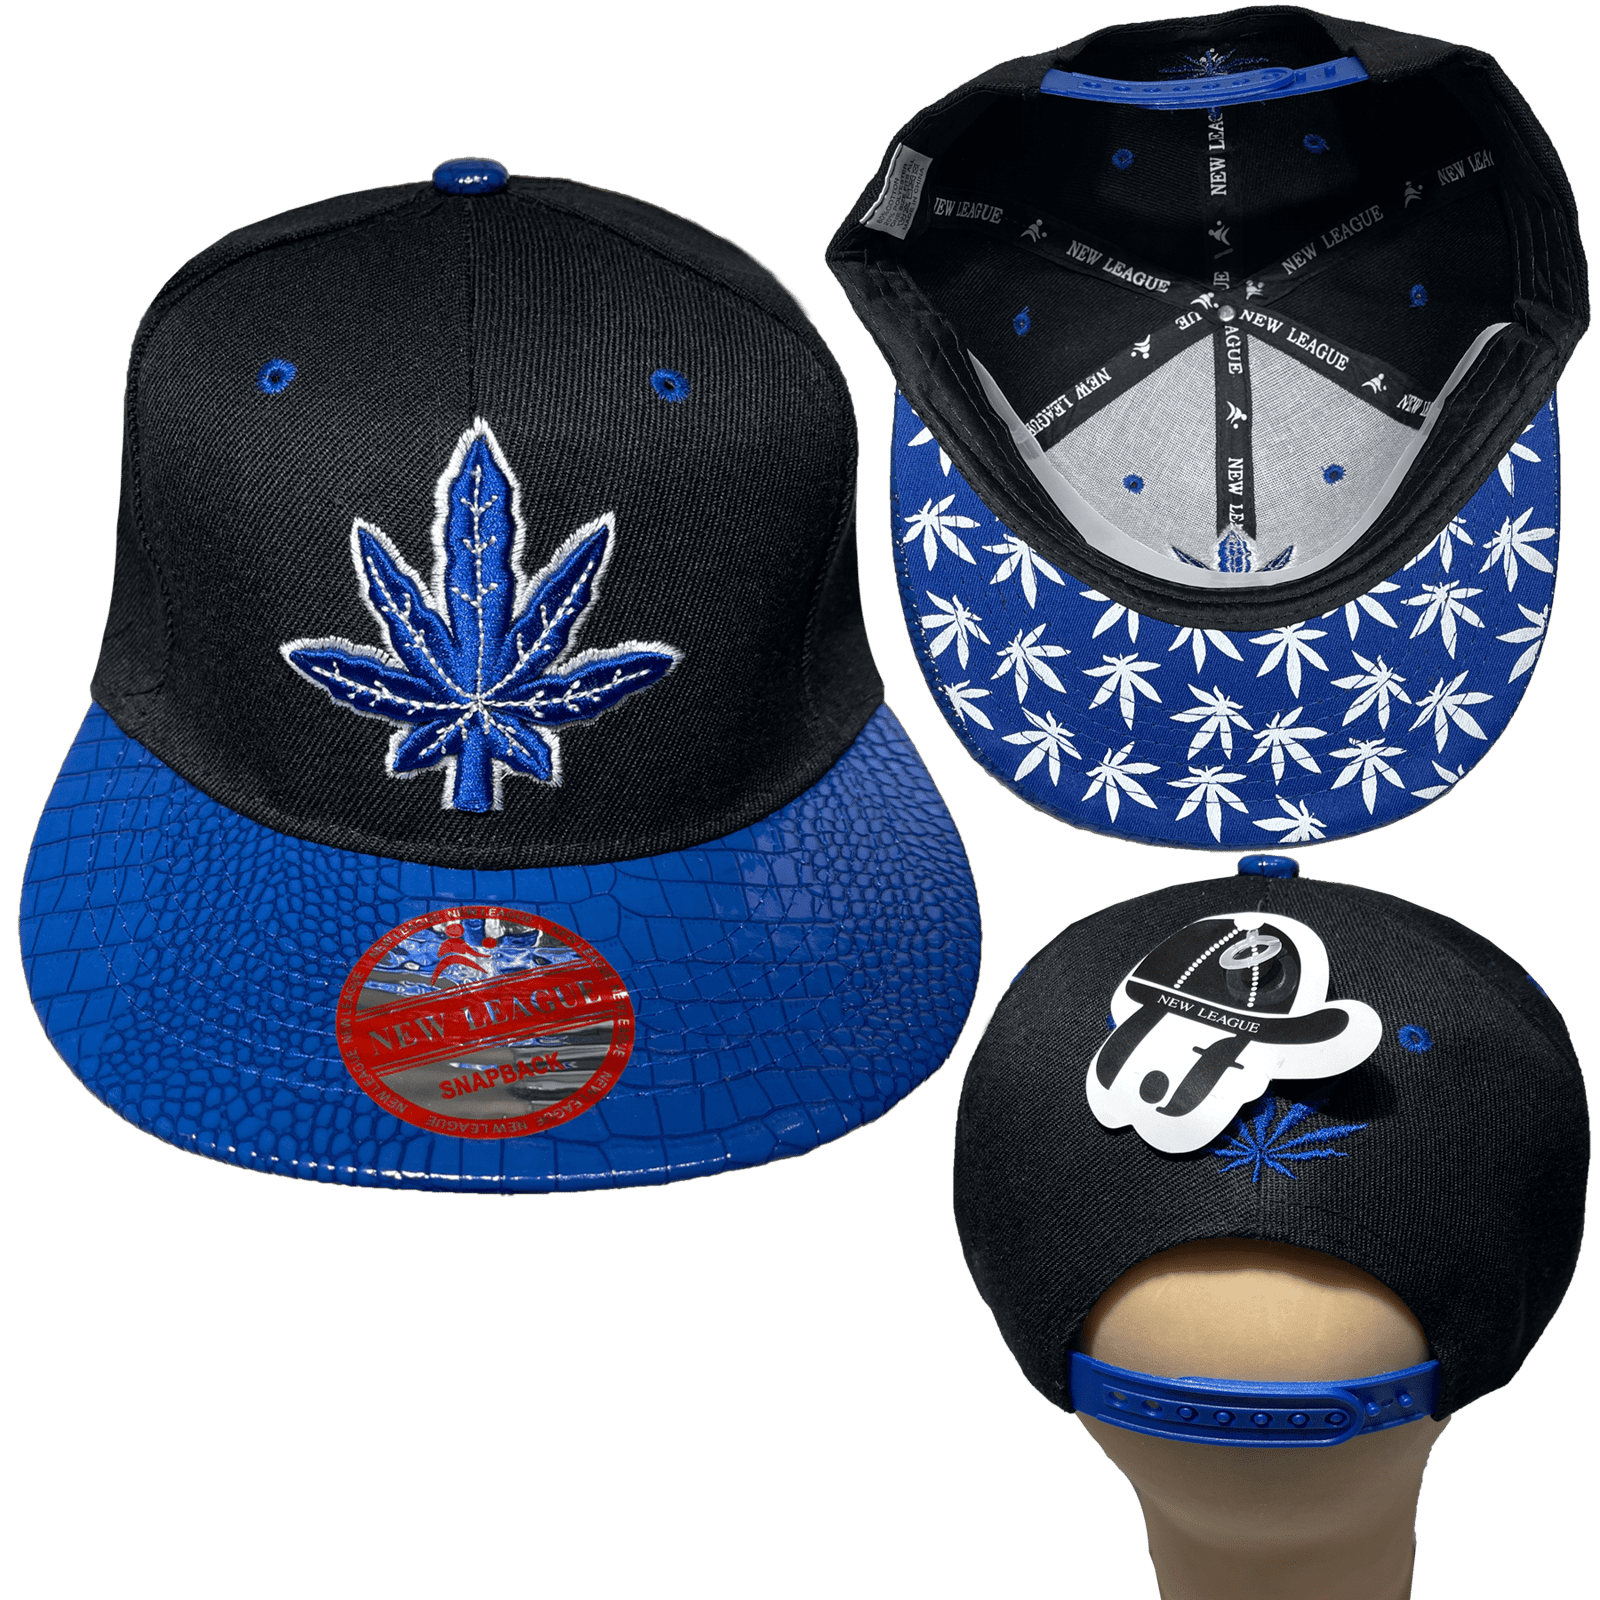 2020 Newst Brand Rock Defqon 1 Cap Pure Cotton Designer Baseball Caps Women Men Hip Hop DJ Hat Unisex Adjustable Snapback Hats Gorras